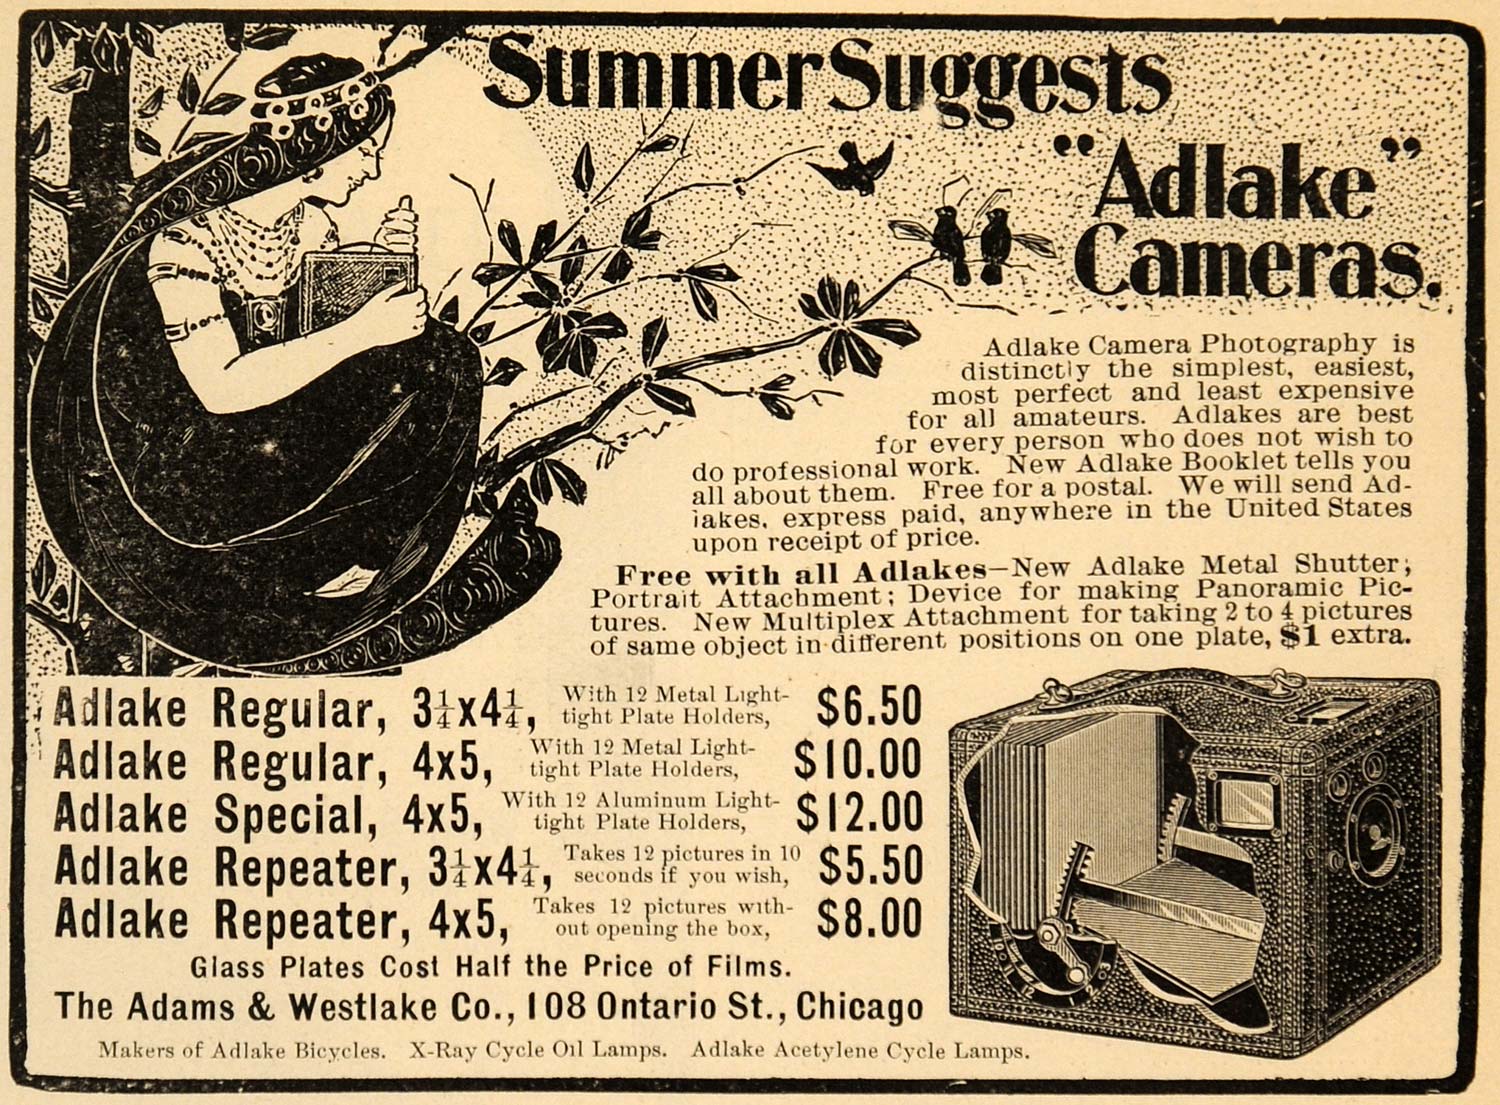 1899 Ad Adams & Westlake Co. Adlake Repeater Camera - ORIGINAL ADVERTISING SCA2